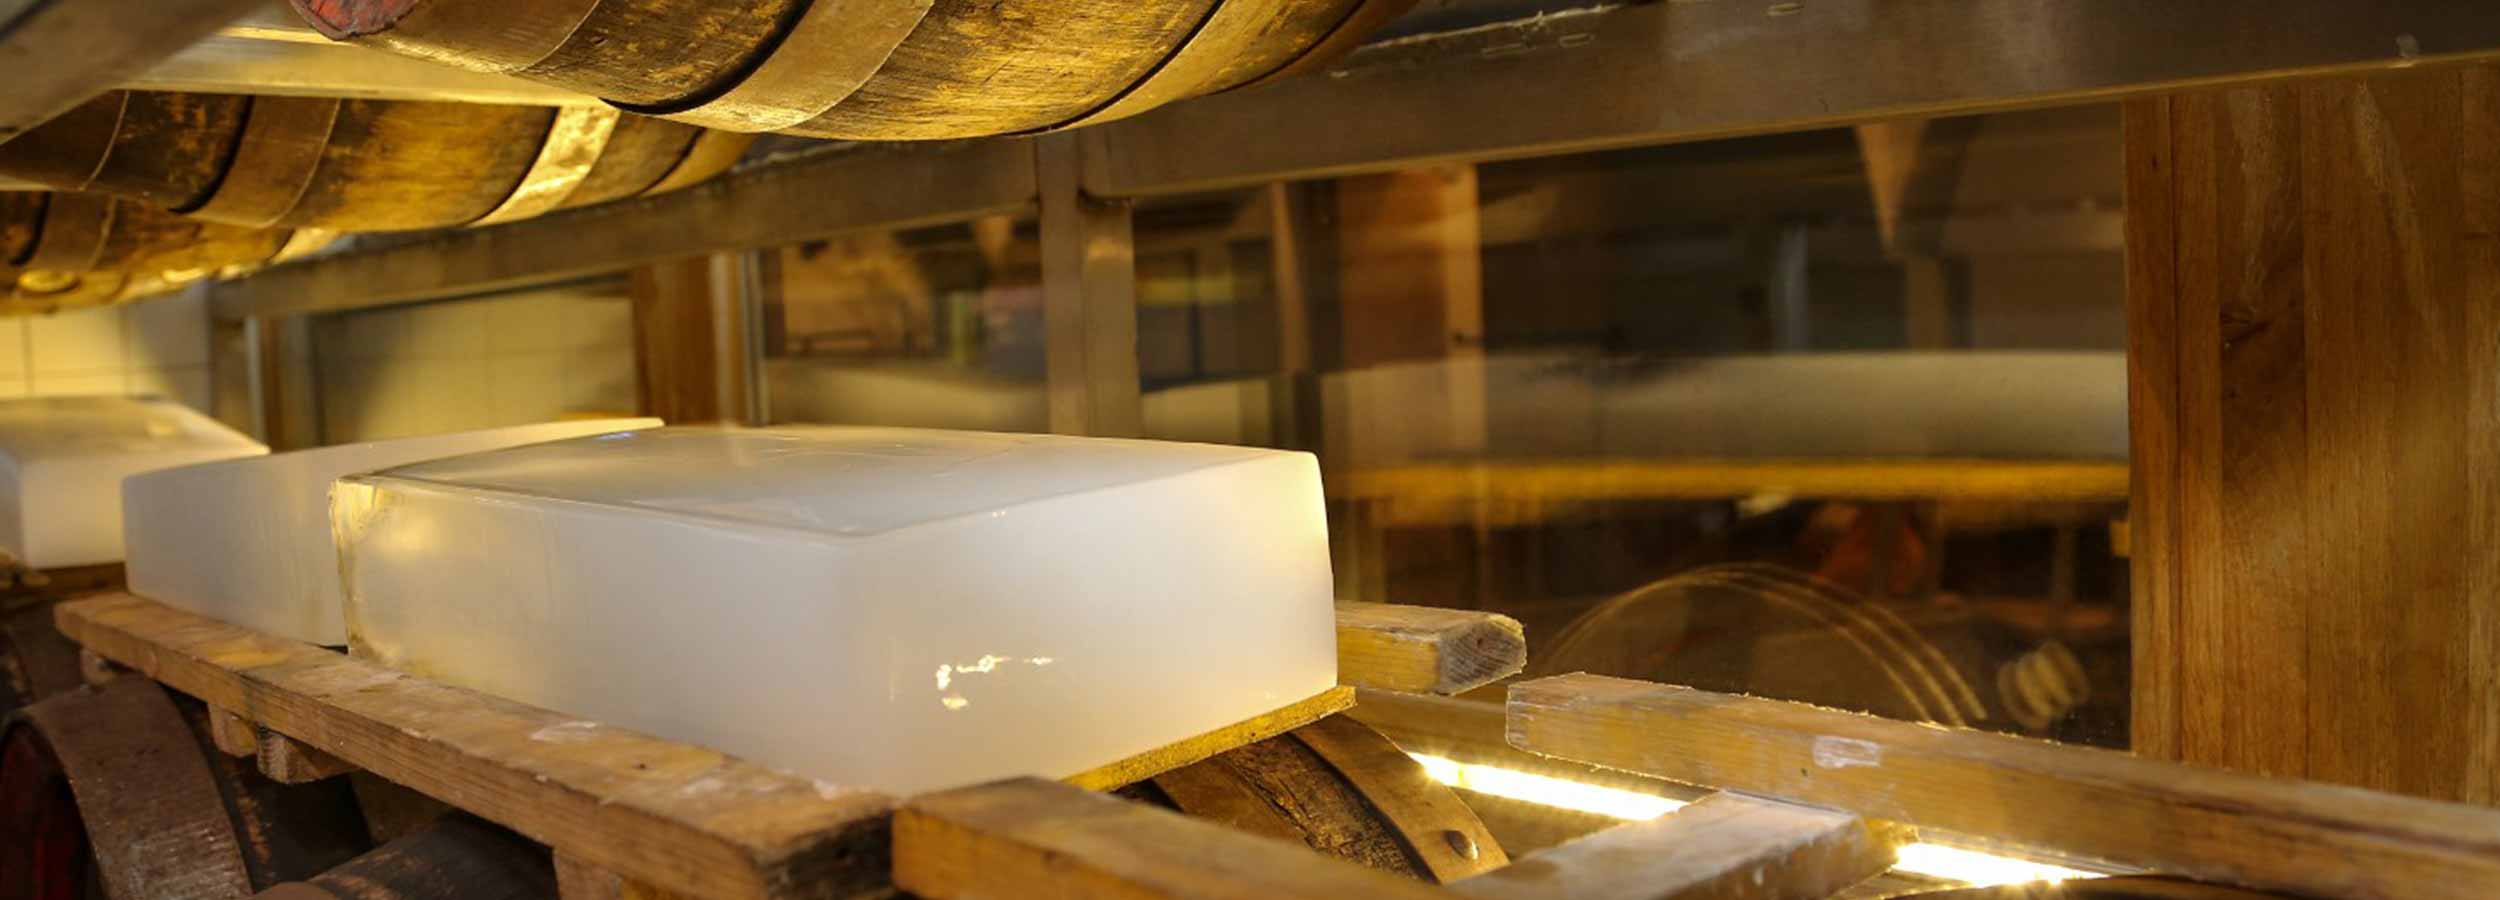 Figure: Beer cellar with wooden barrel cooling